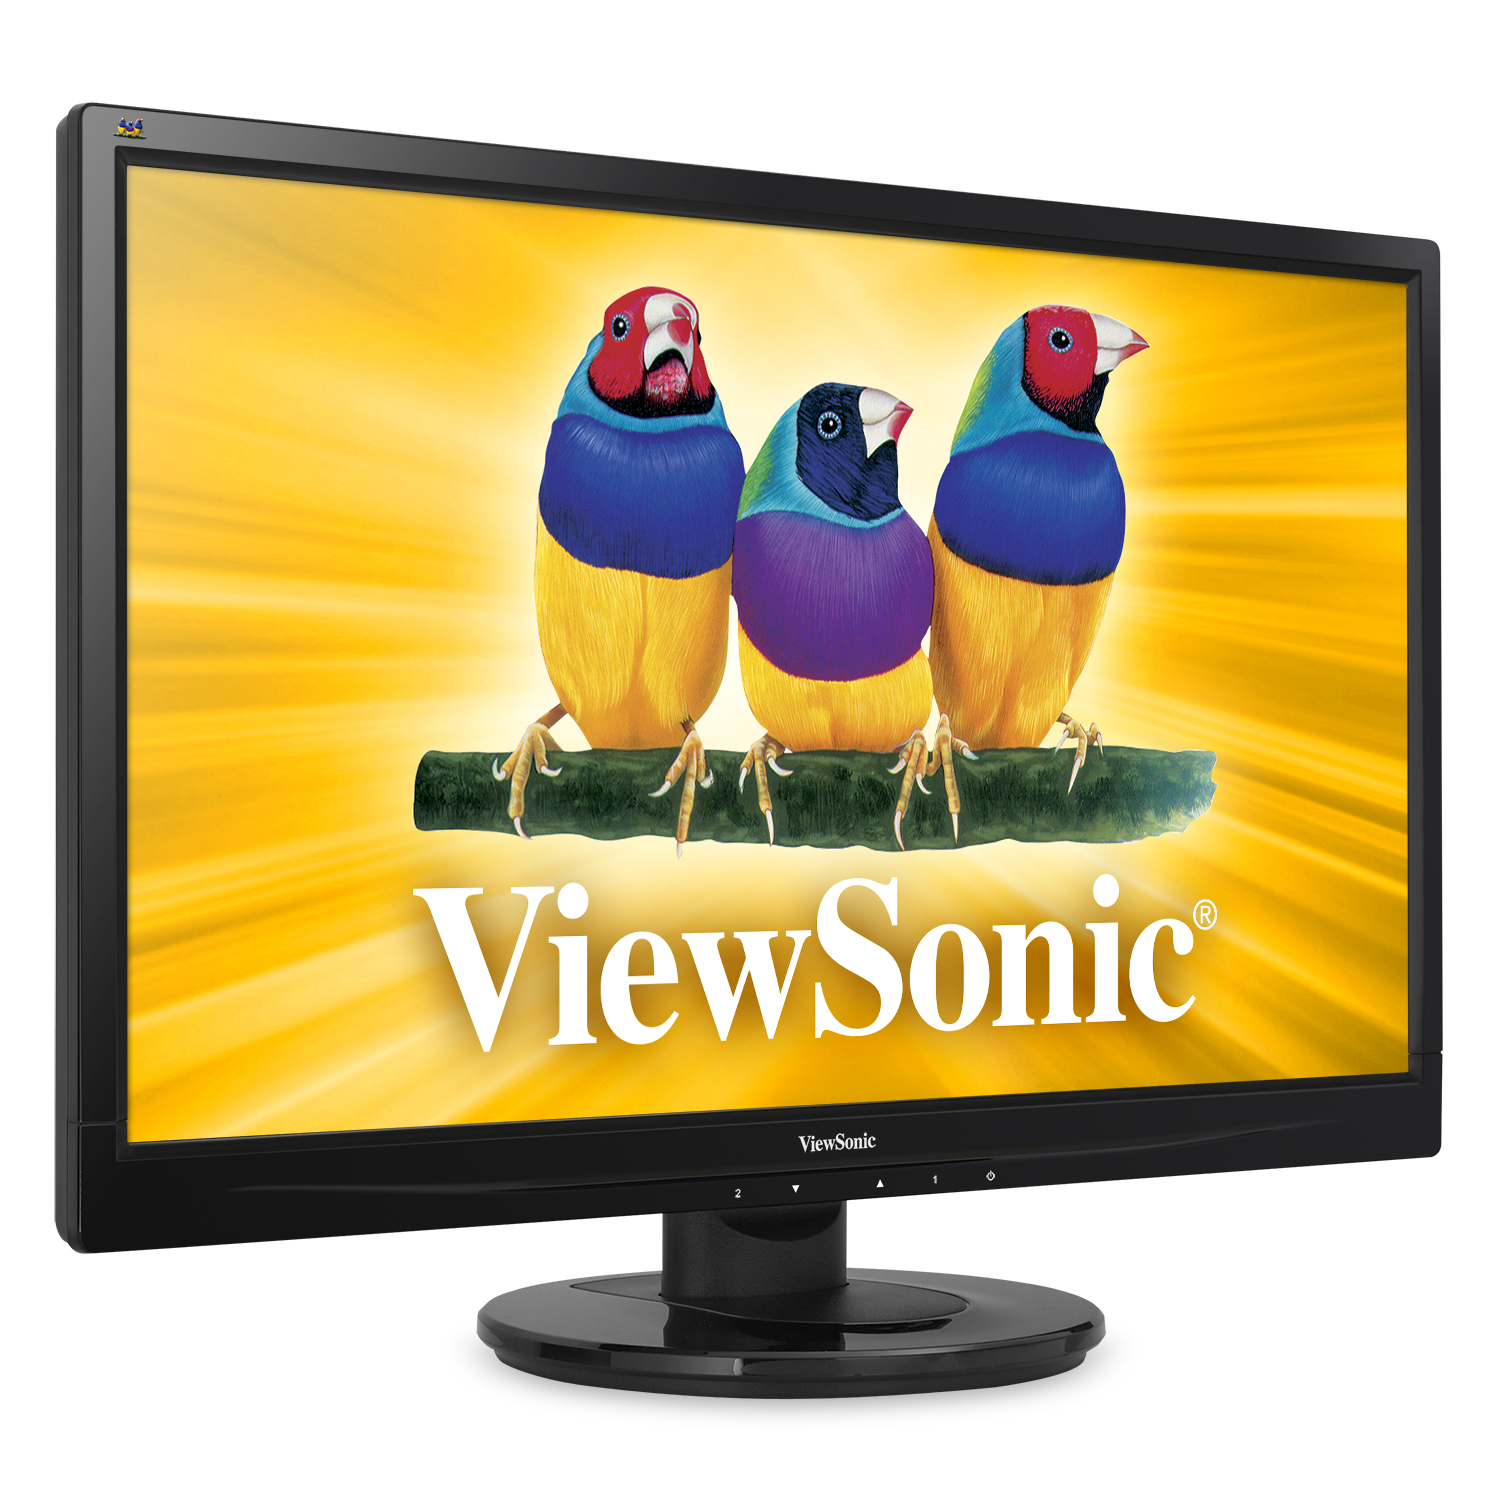 ViewSonic VA2446M-LED نمایشگر